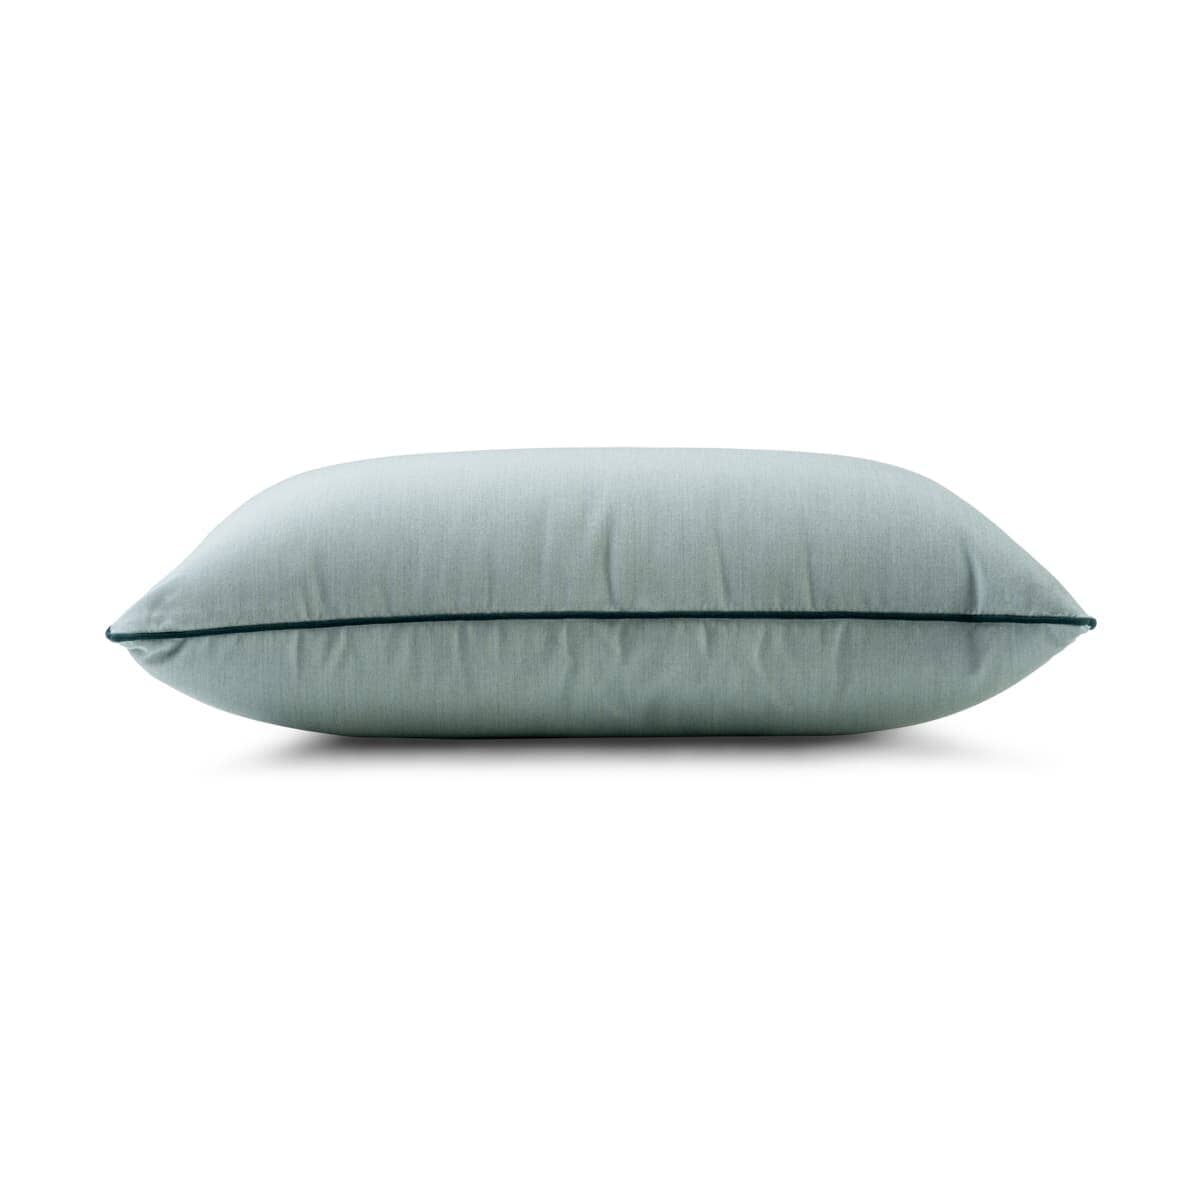 The Rectangle Throw Pillow - Rivie Green Rectangle Throw Pillow Business & Pleasure Co Aus 